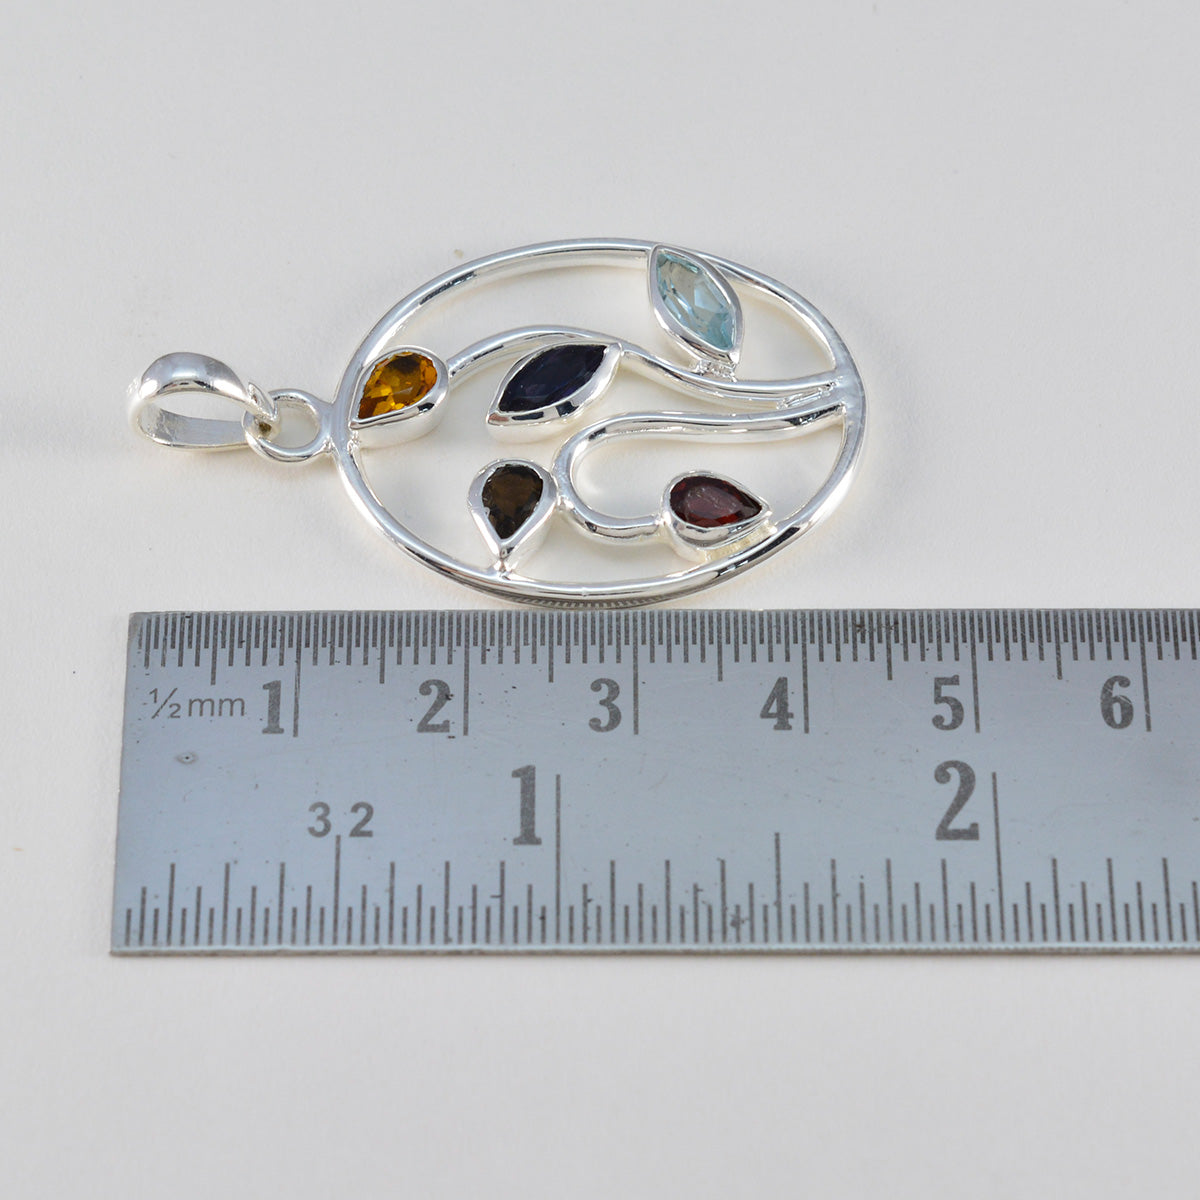 Riyo Ravishing Gems Multi Faceted Multi Color Multi Stone Solid Silver Pendant Gift For Wedding